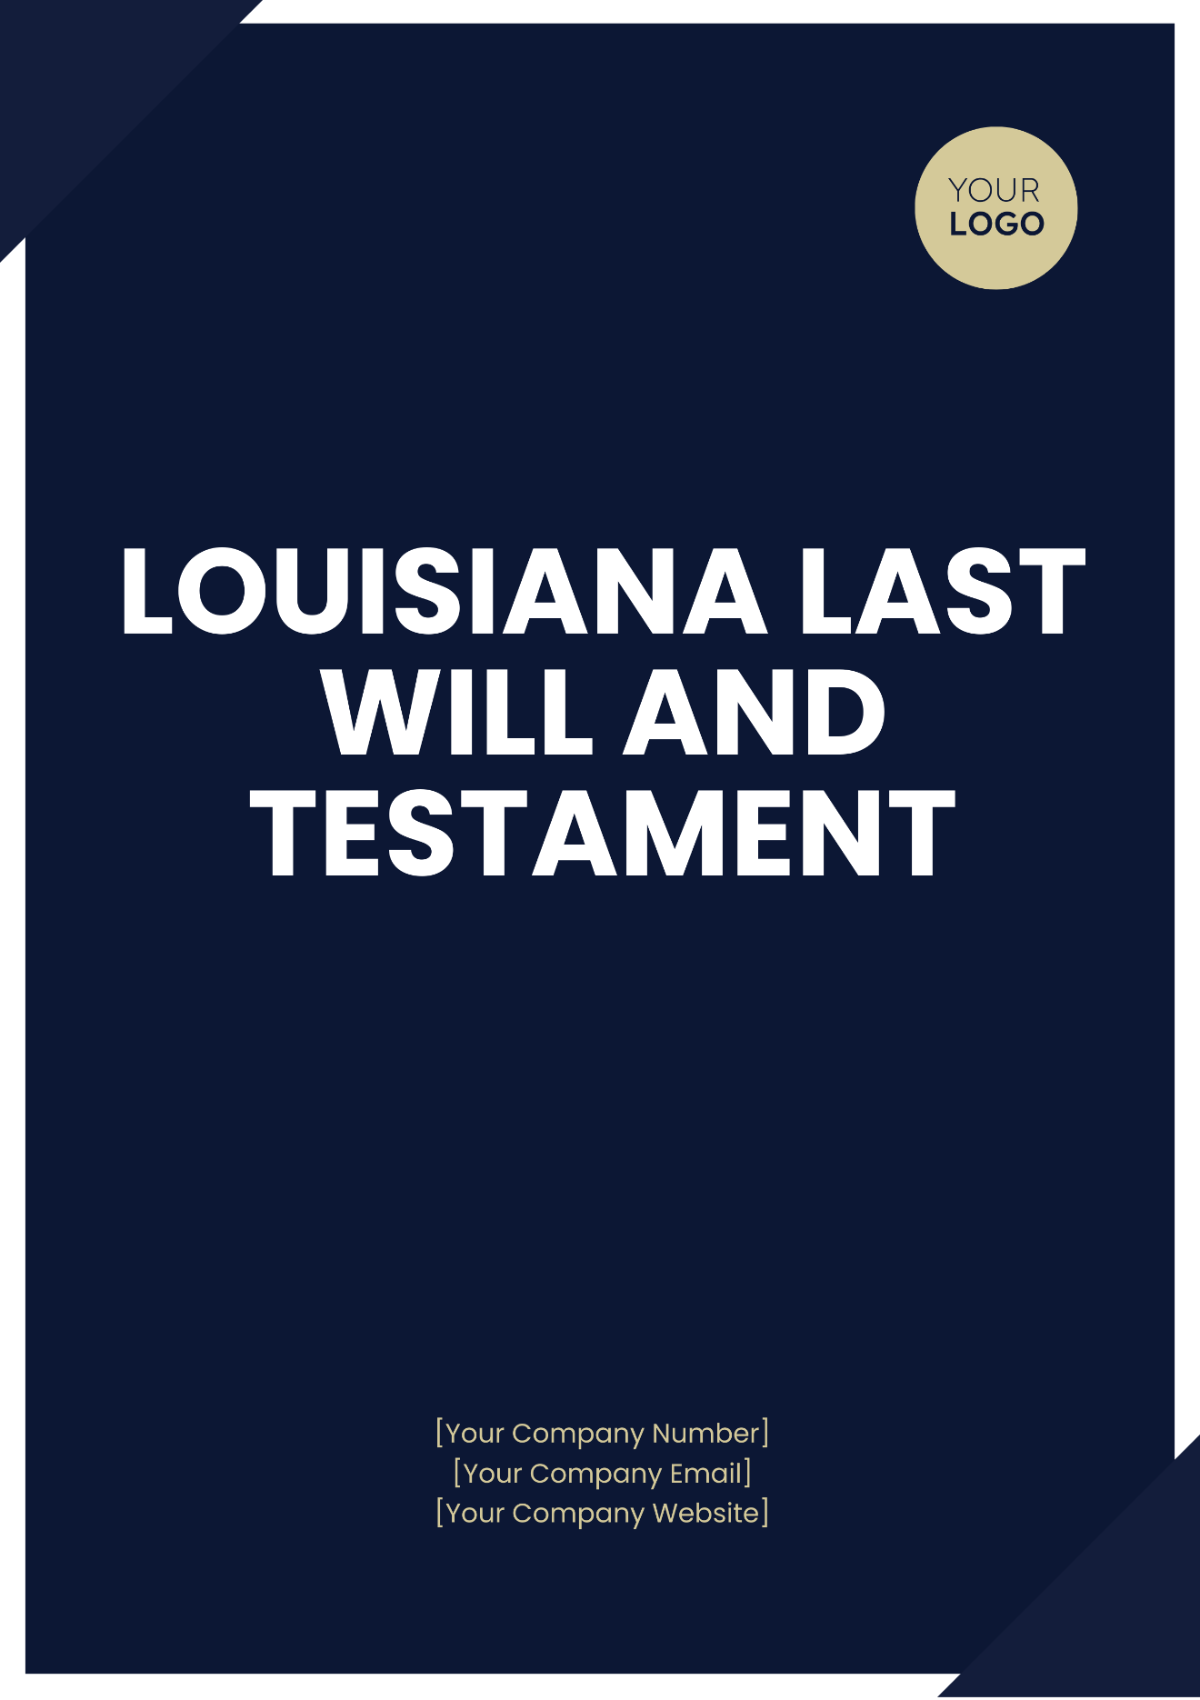 Free Louisiana Last Will and Testament Template